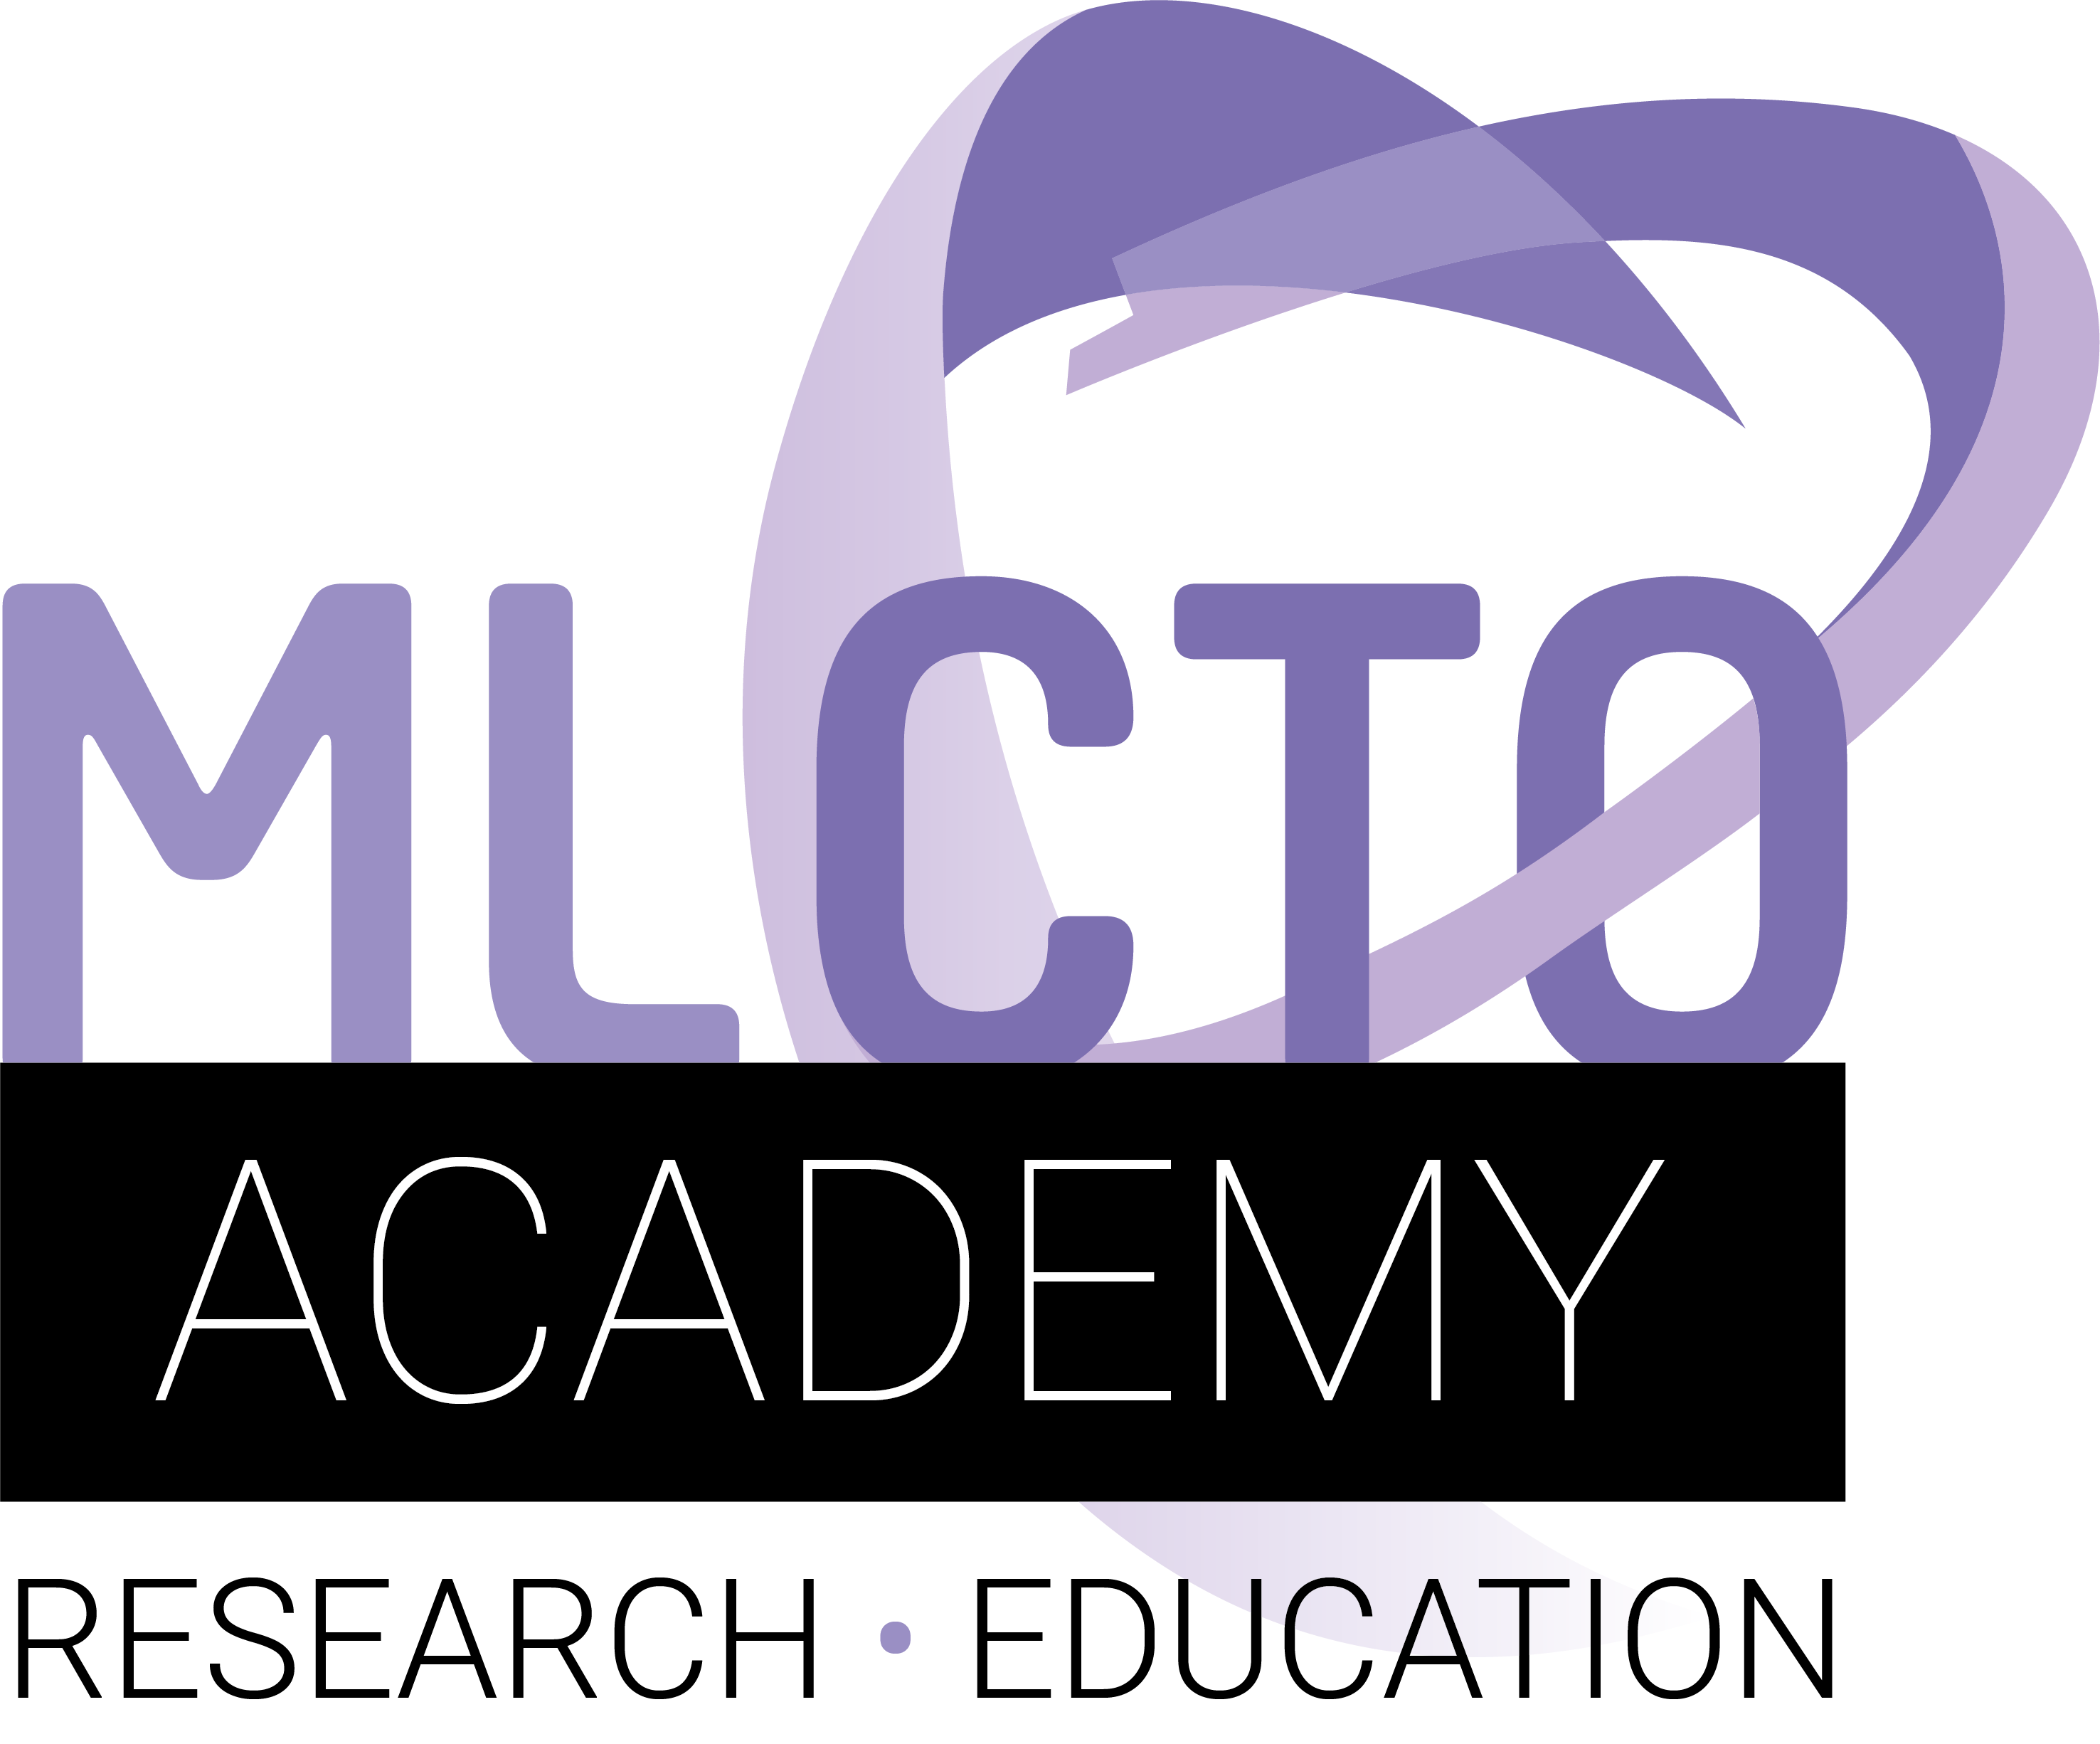 MLCTO Academy